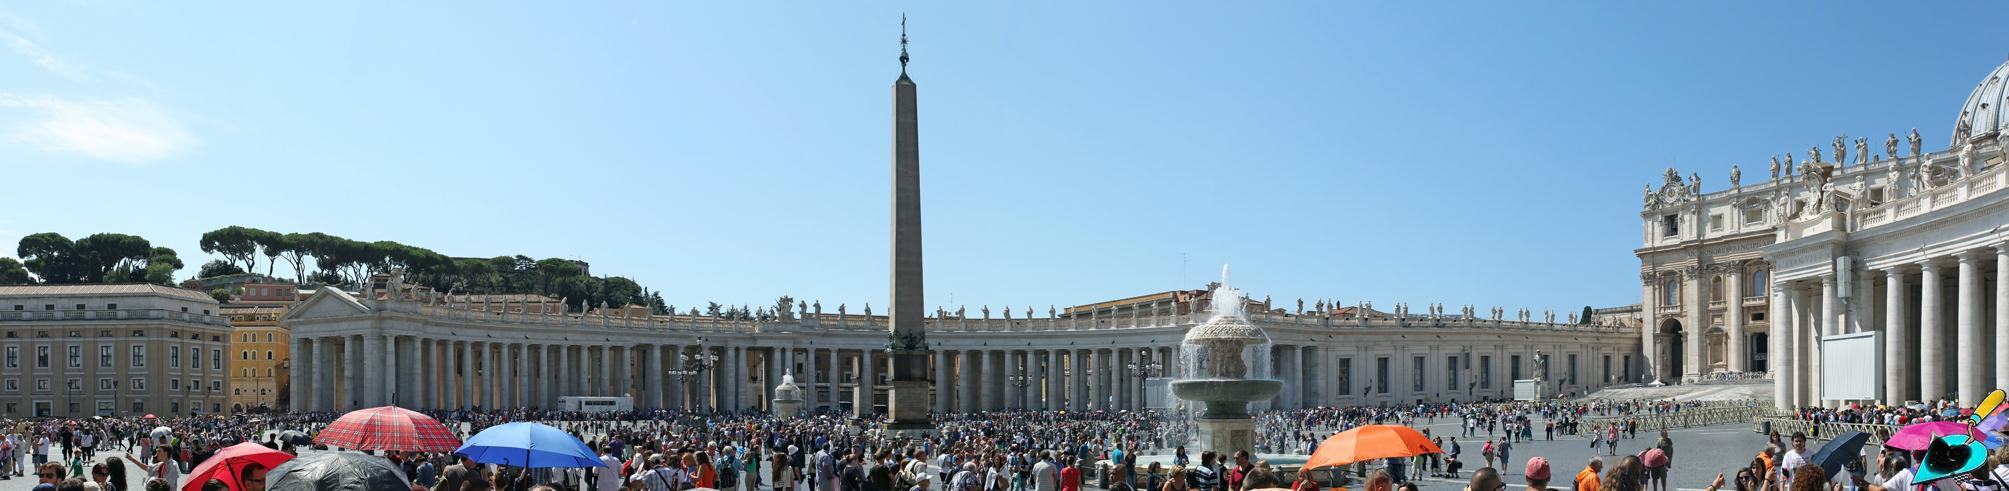 Ватикан, Piazza San Pietro. Ватикан — Panoramas